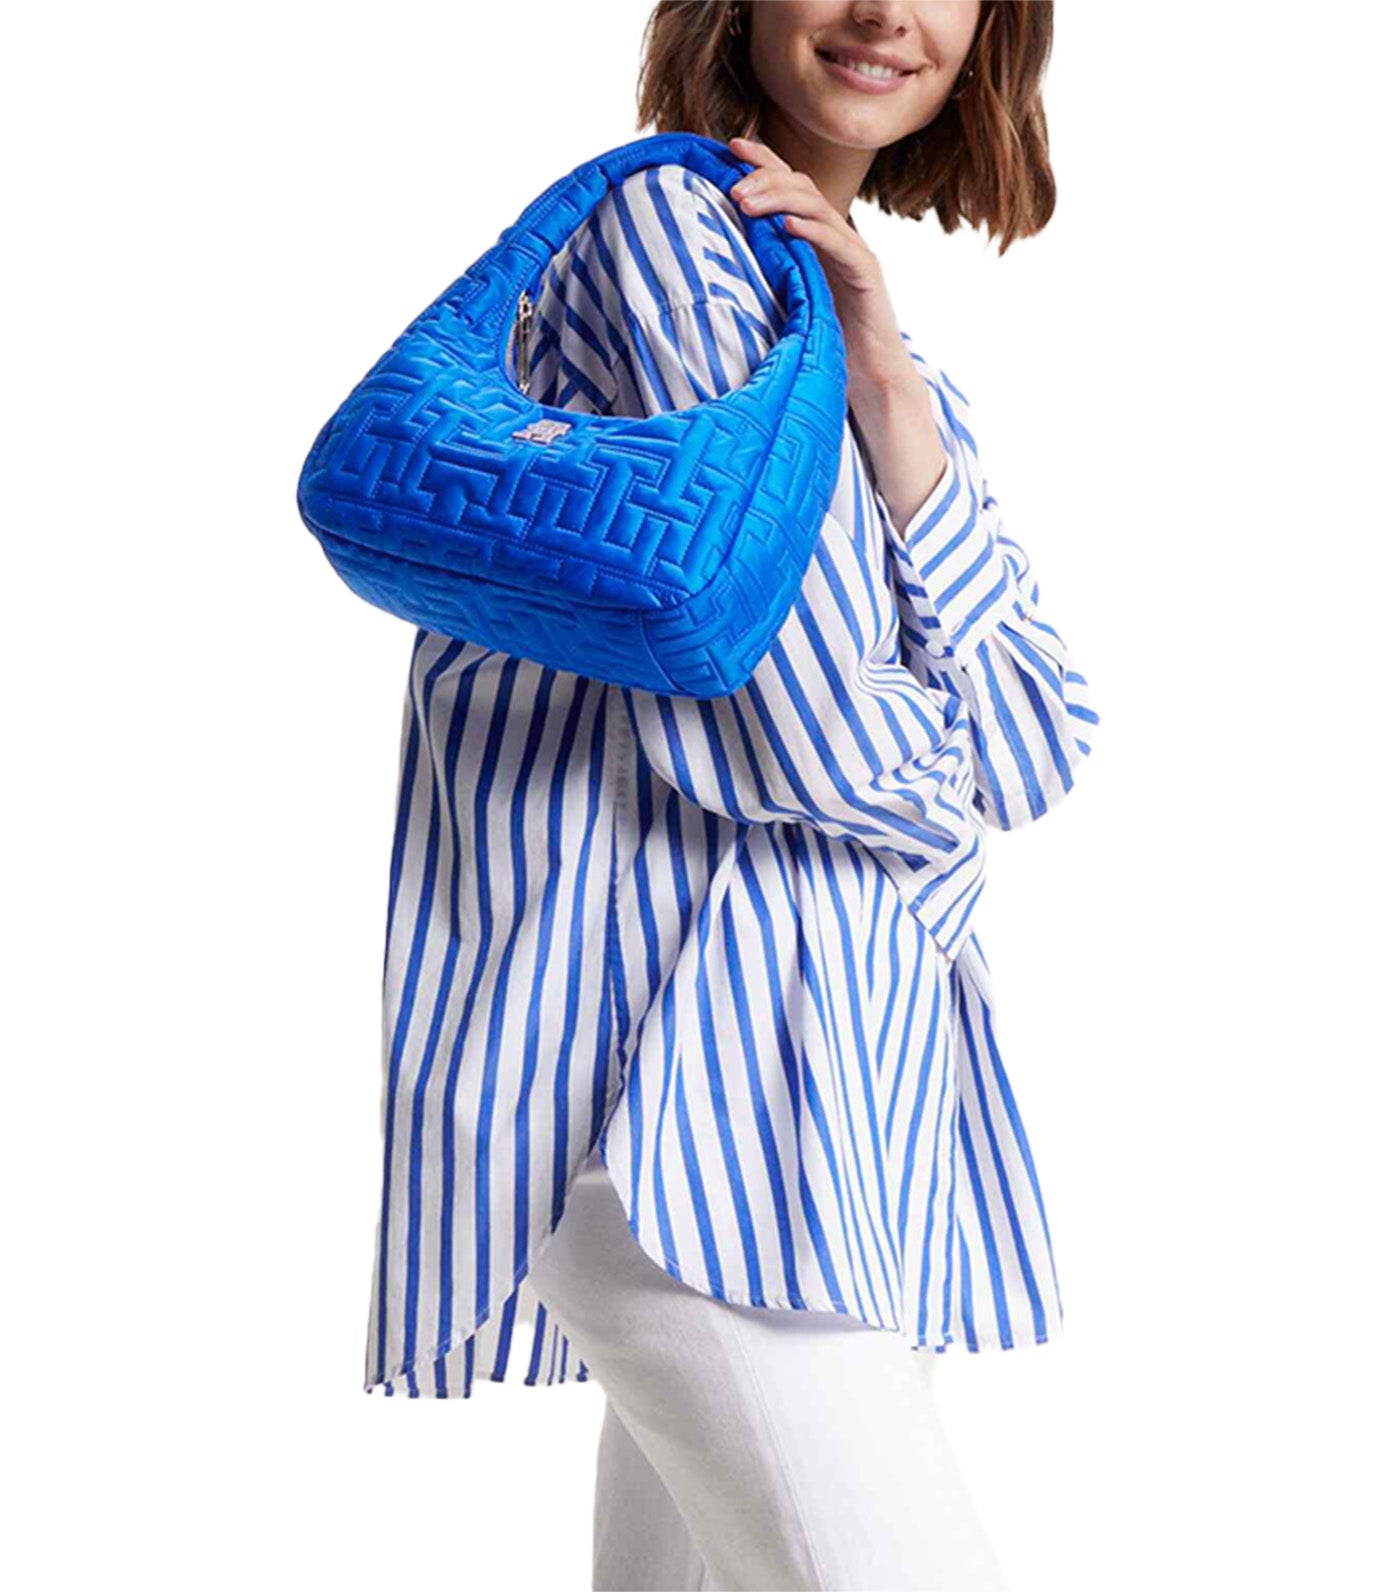 Women's Chic Nylon Shoulder Bag Ultra Blue